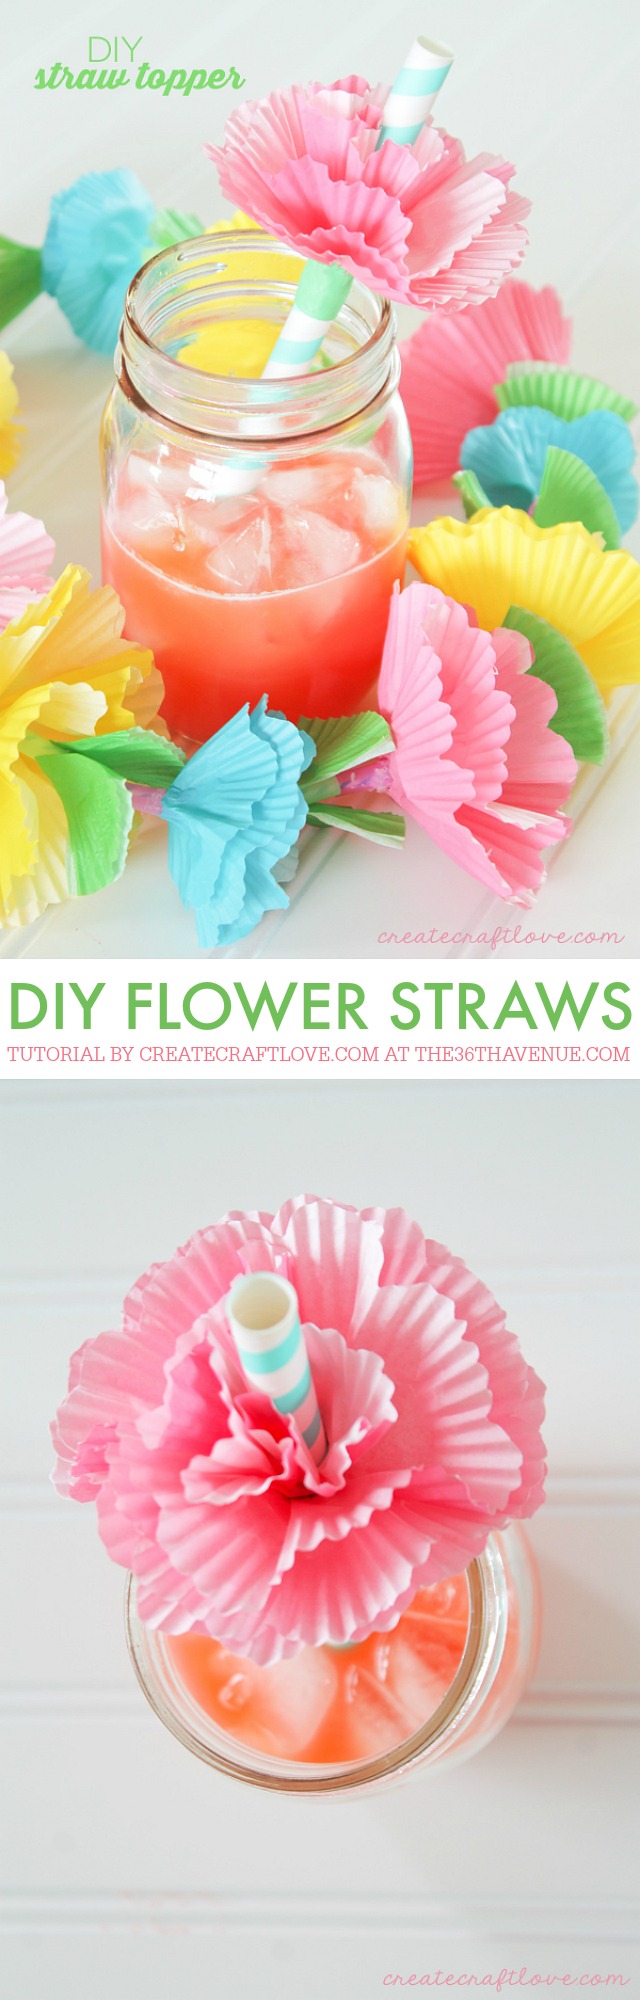 https://www.the36thavenue.com/wp-content/uploads/2015/06/Crafts-DIY-Flower-Straws-.jpg